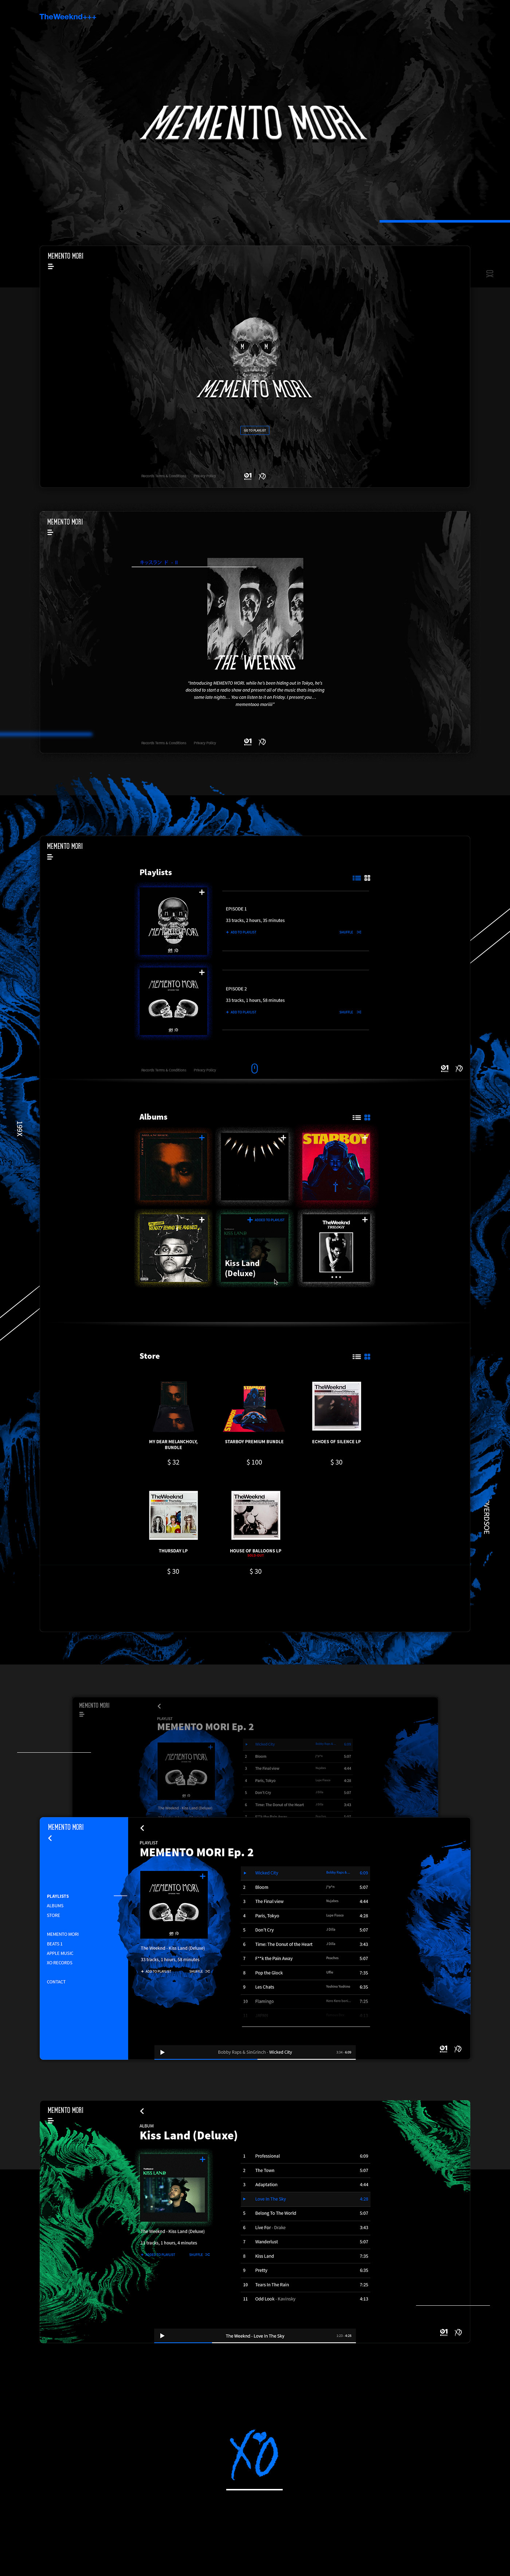 the weeknd weeknd memento mori Website playlist Album music skull skulls UI